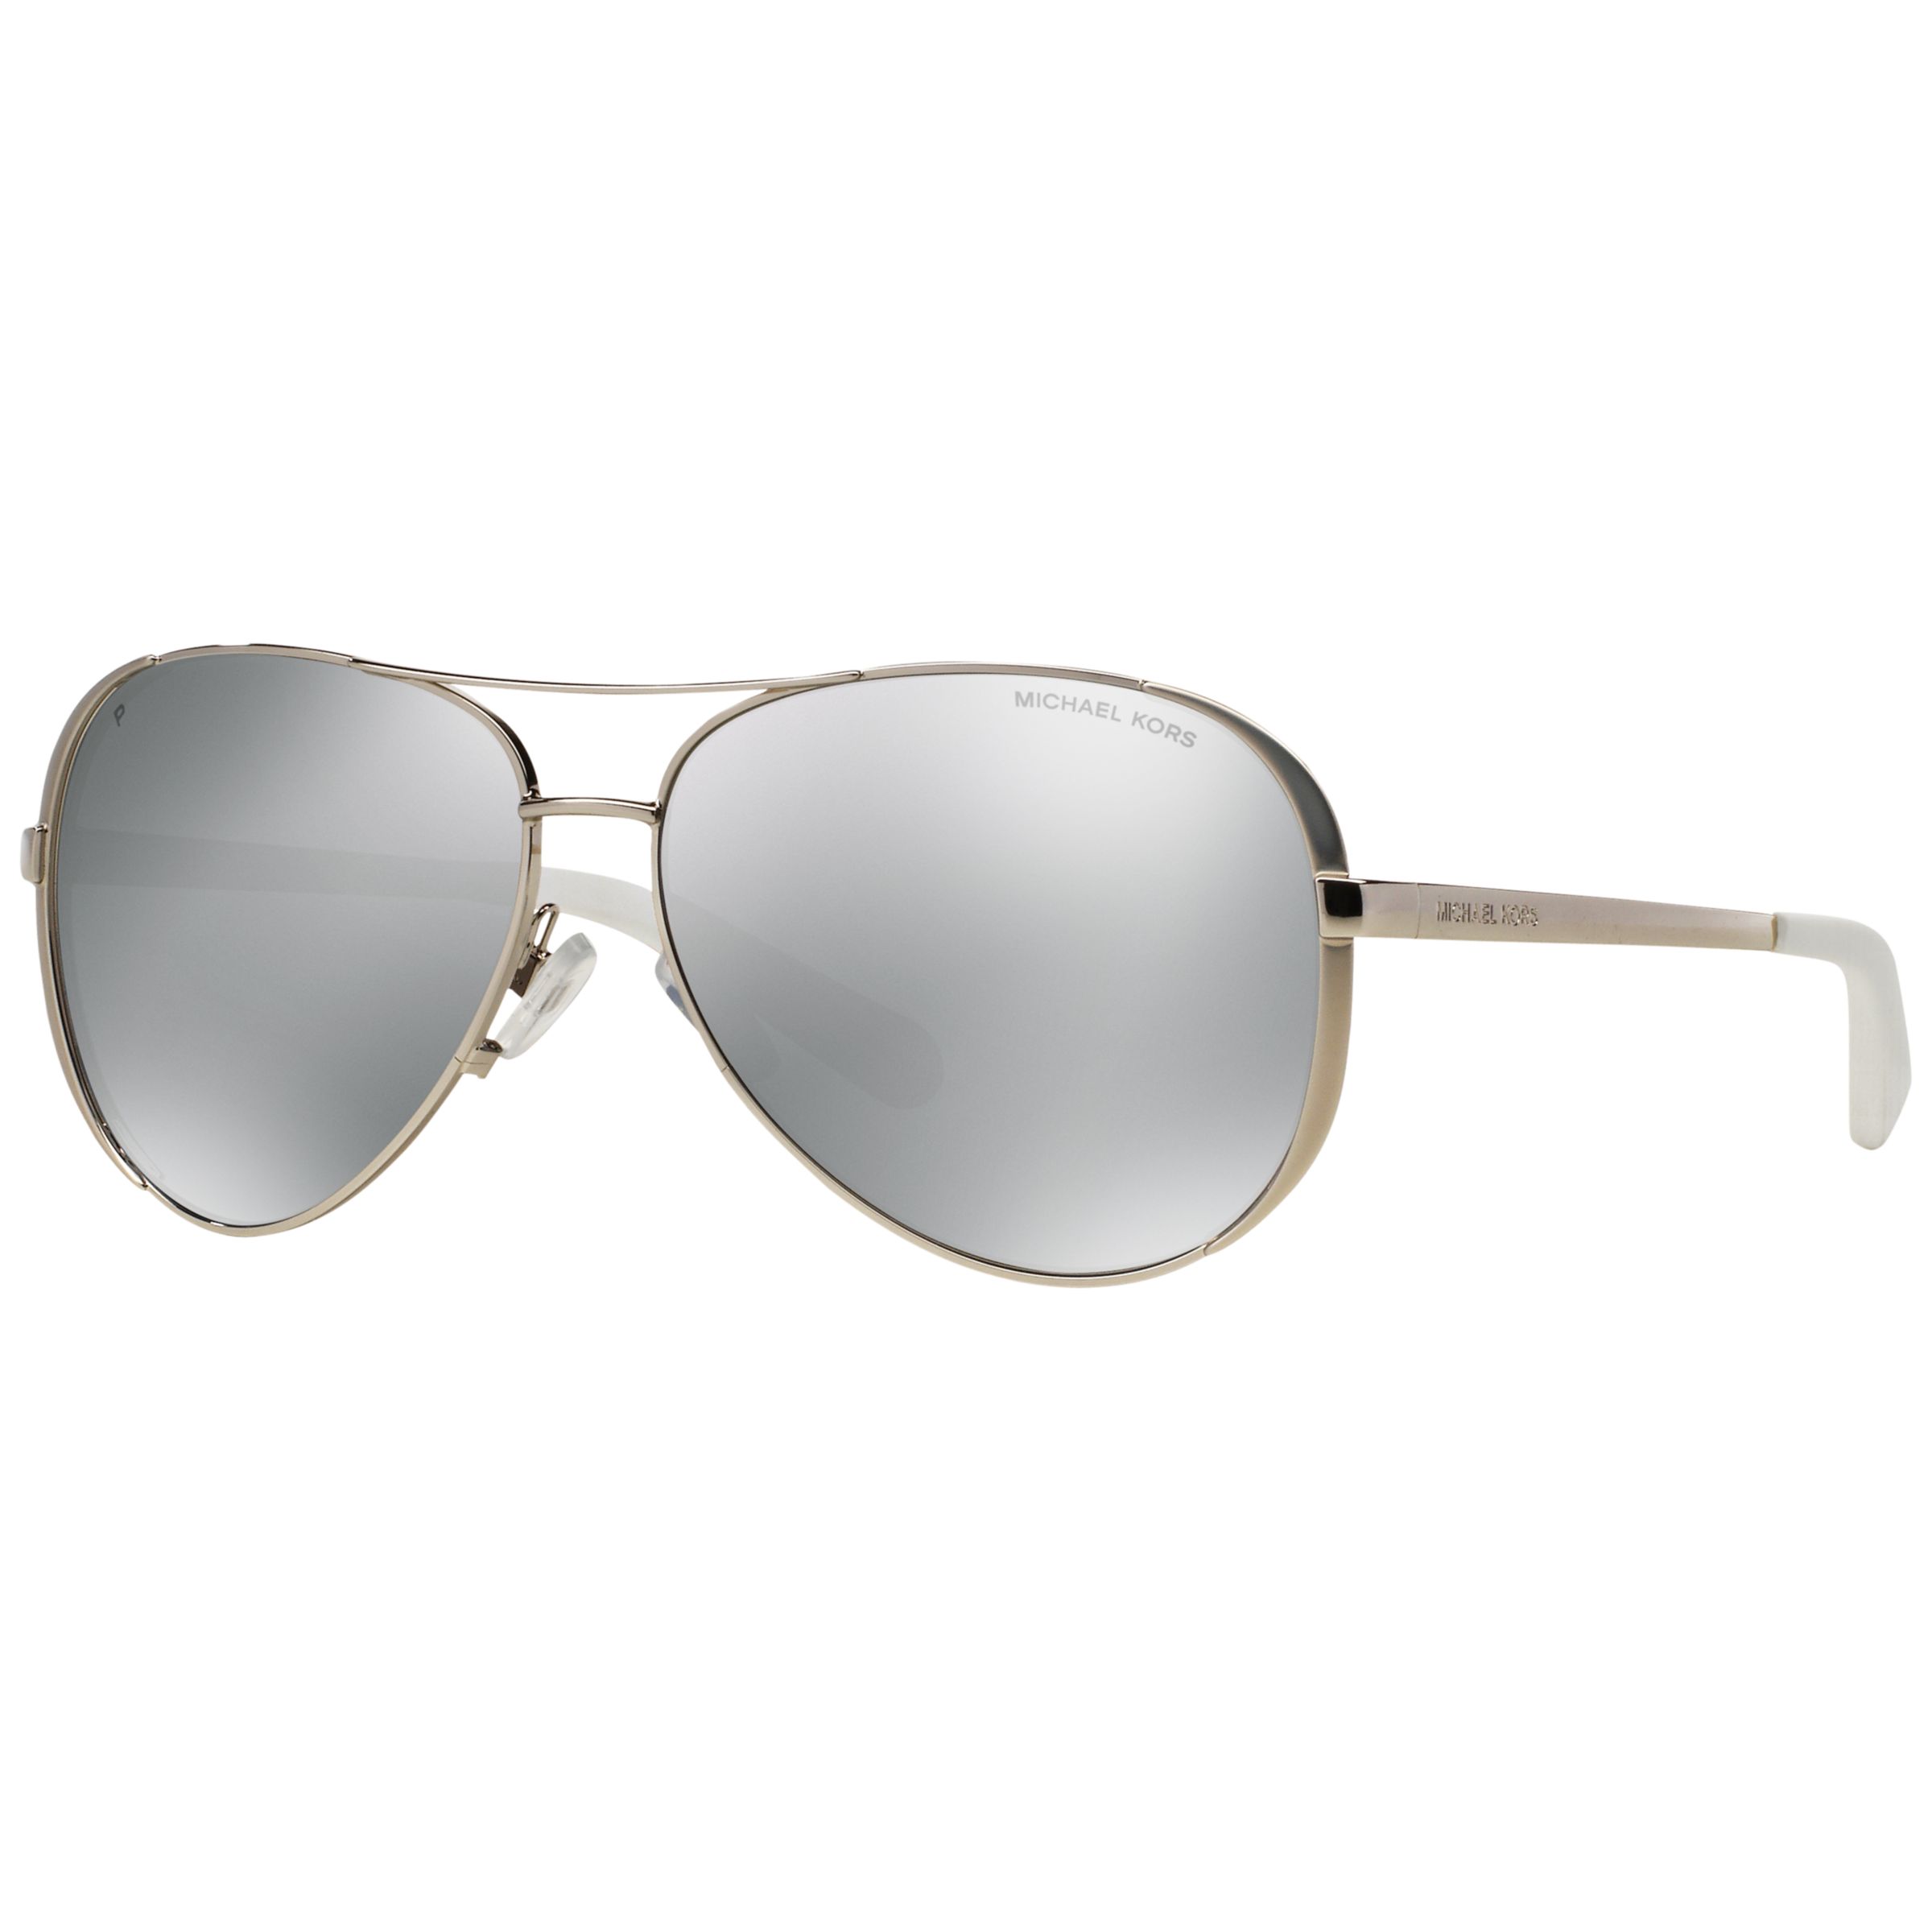 michael kors mk5004 chelsea polarized sunglasses